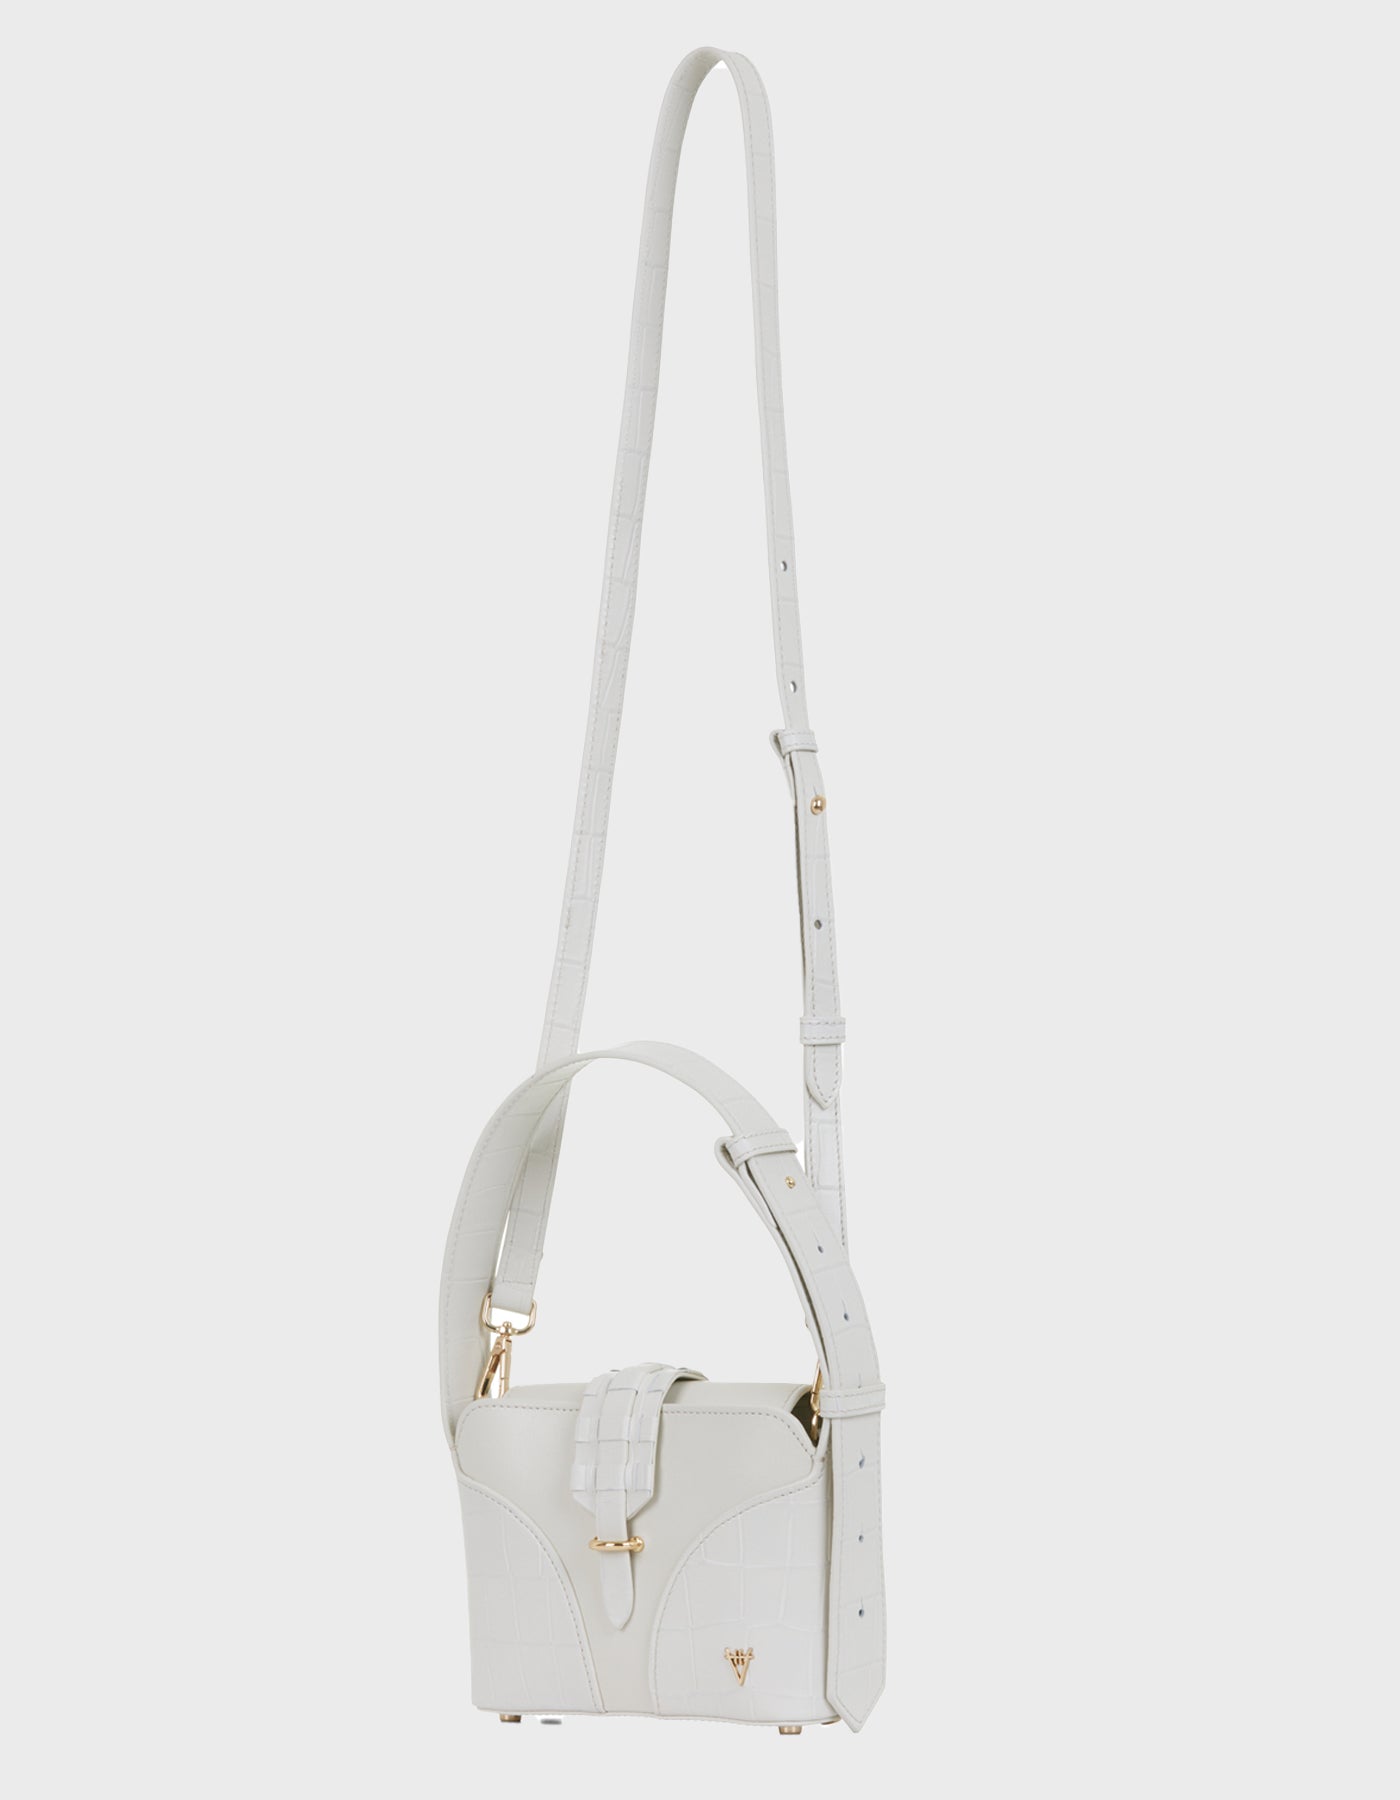 HiVa Atelier | Luna Shoulder Bag Bone | Beautiful and Versatile